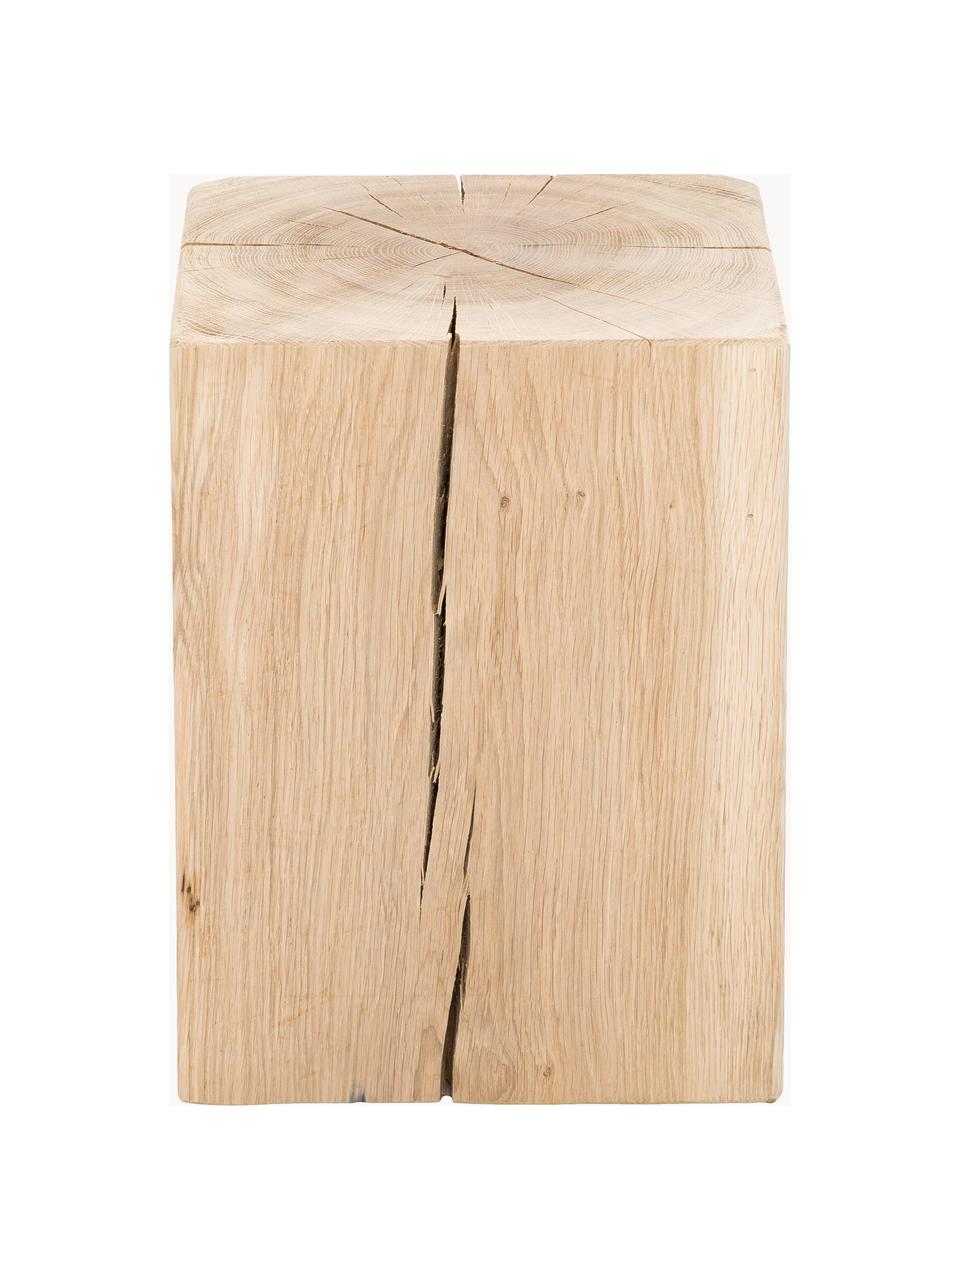 Kruk Block van eikenhout, Eikenhout, Eikenhout, B 29 x H 40 cm